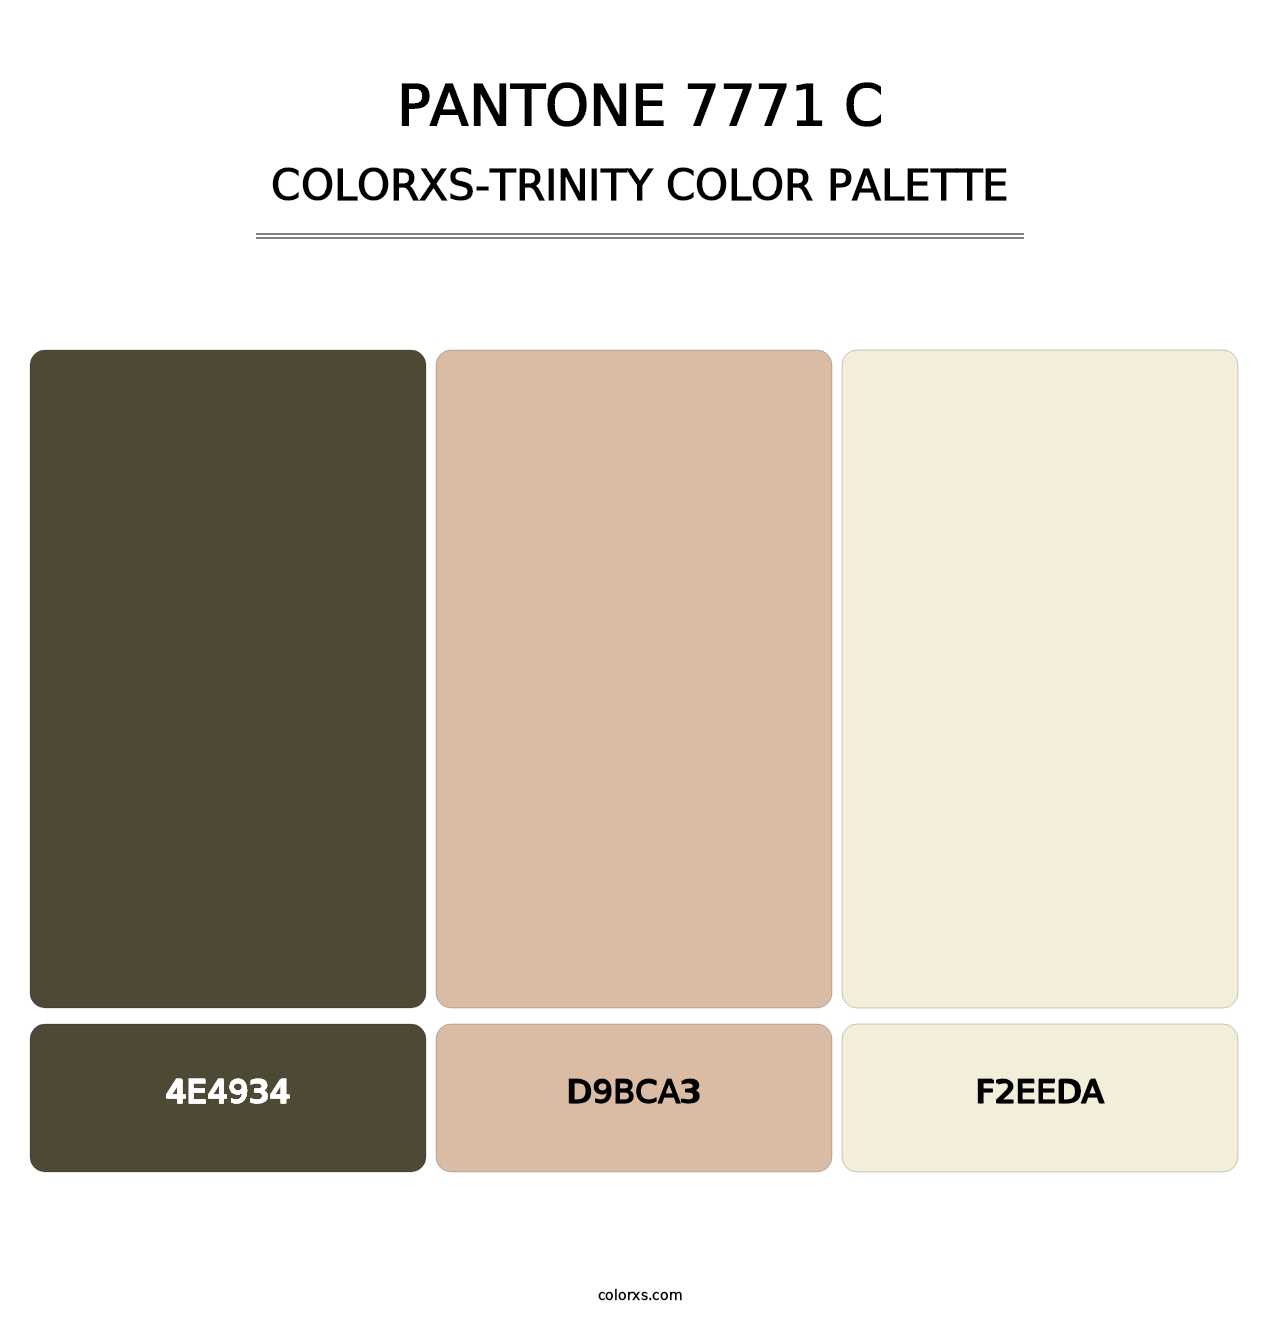 PANTONE 7771 C - Colorxs Trinity Palette